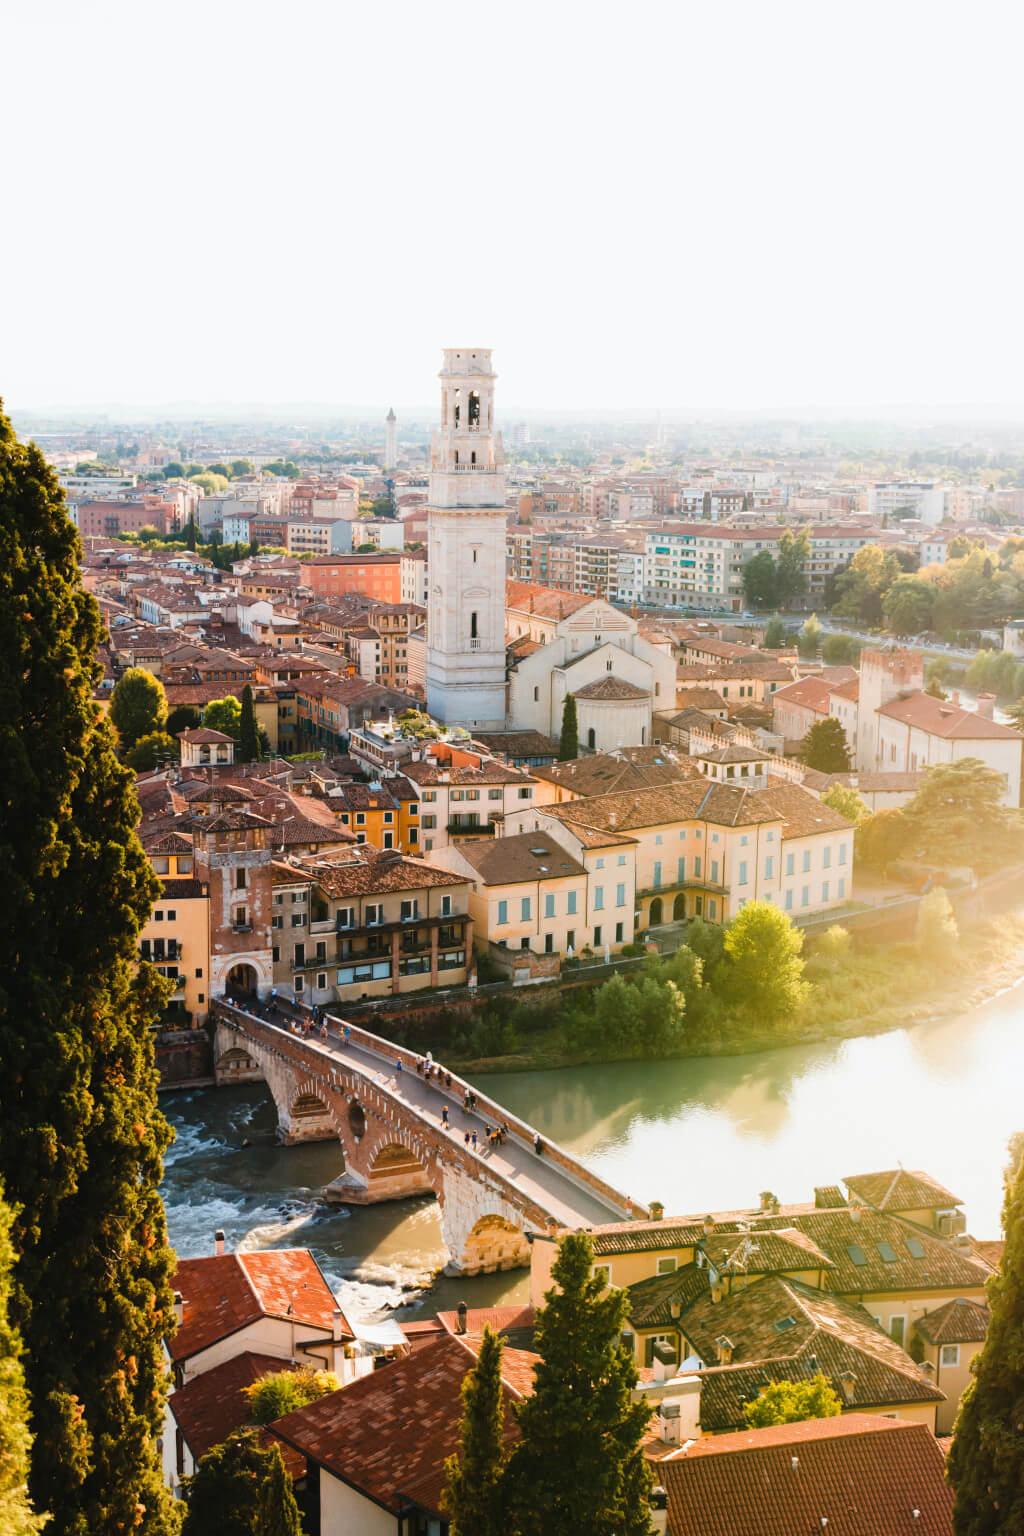 Five things to see in Verona